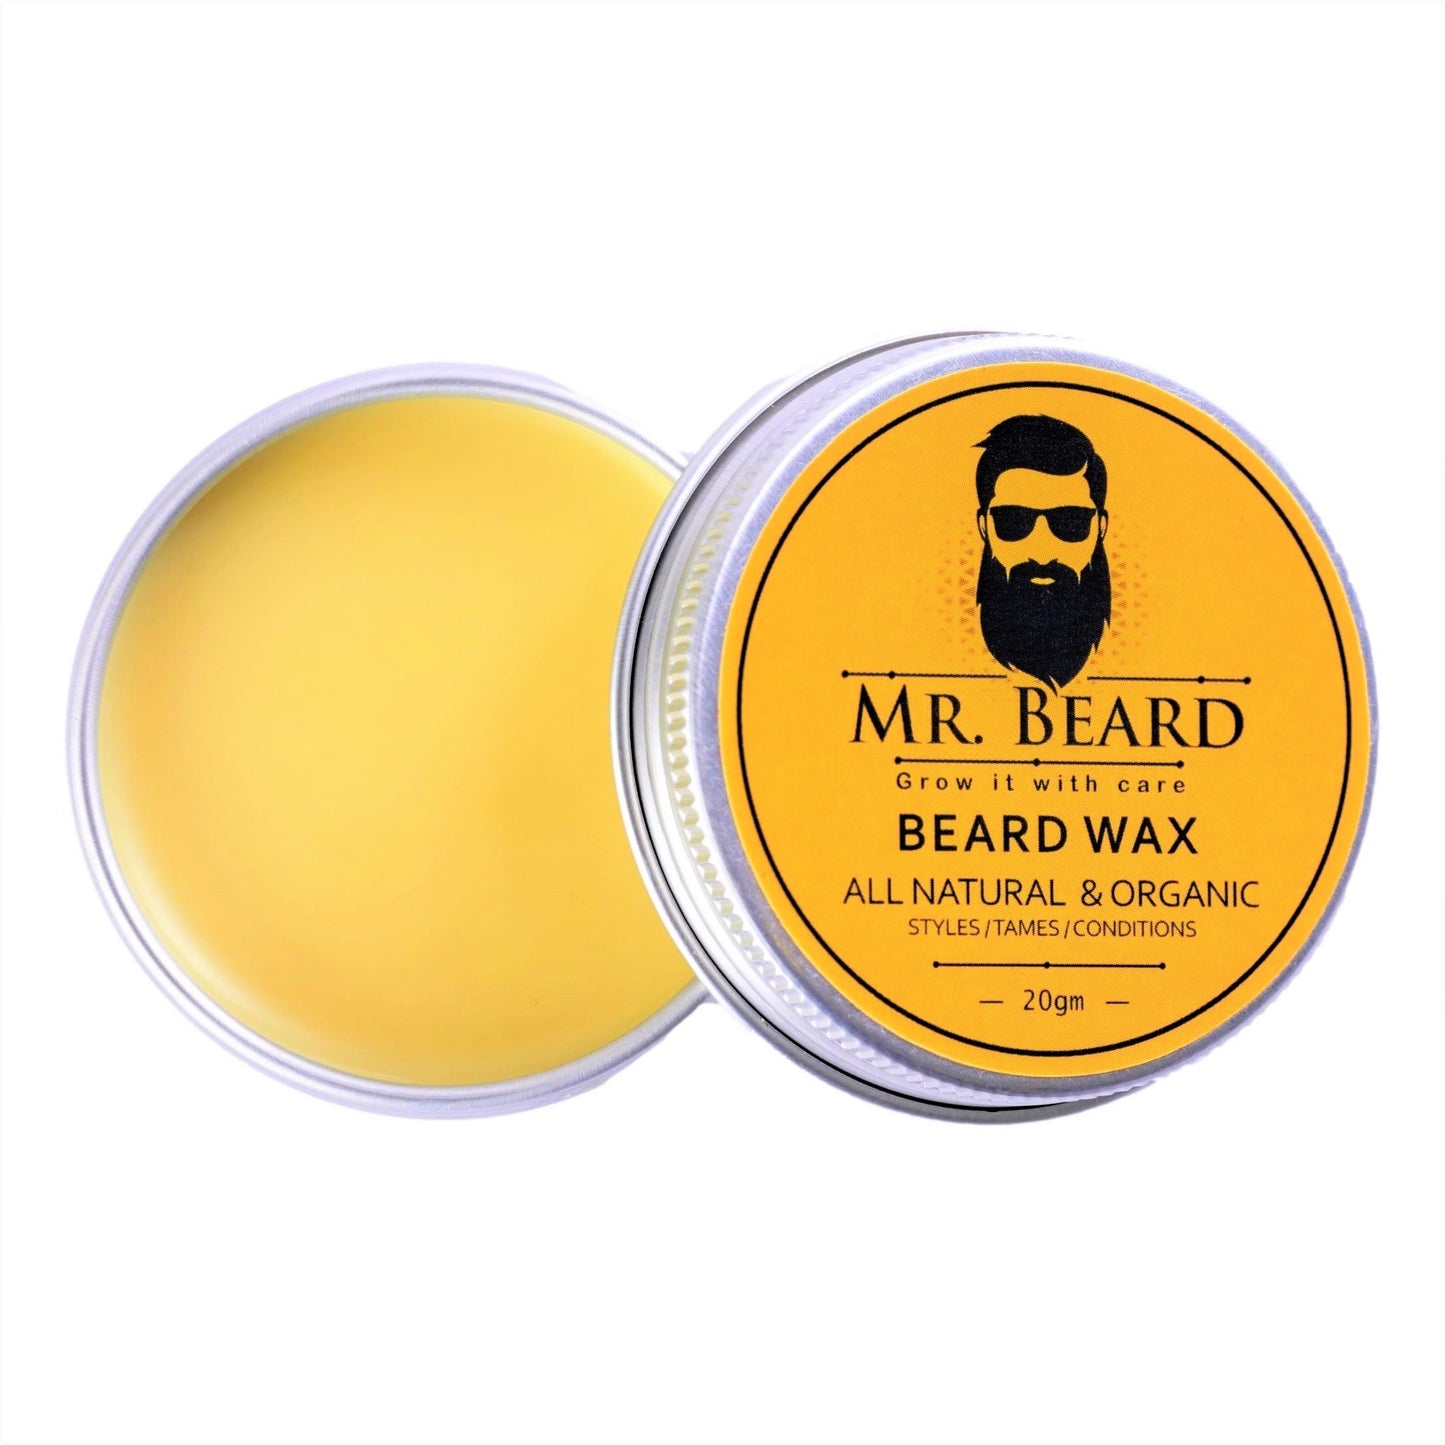 Beard Oil + Beard Balm + Beard Wax + Travel Pouch